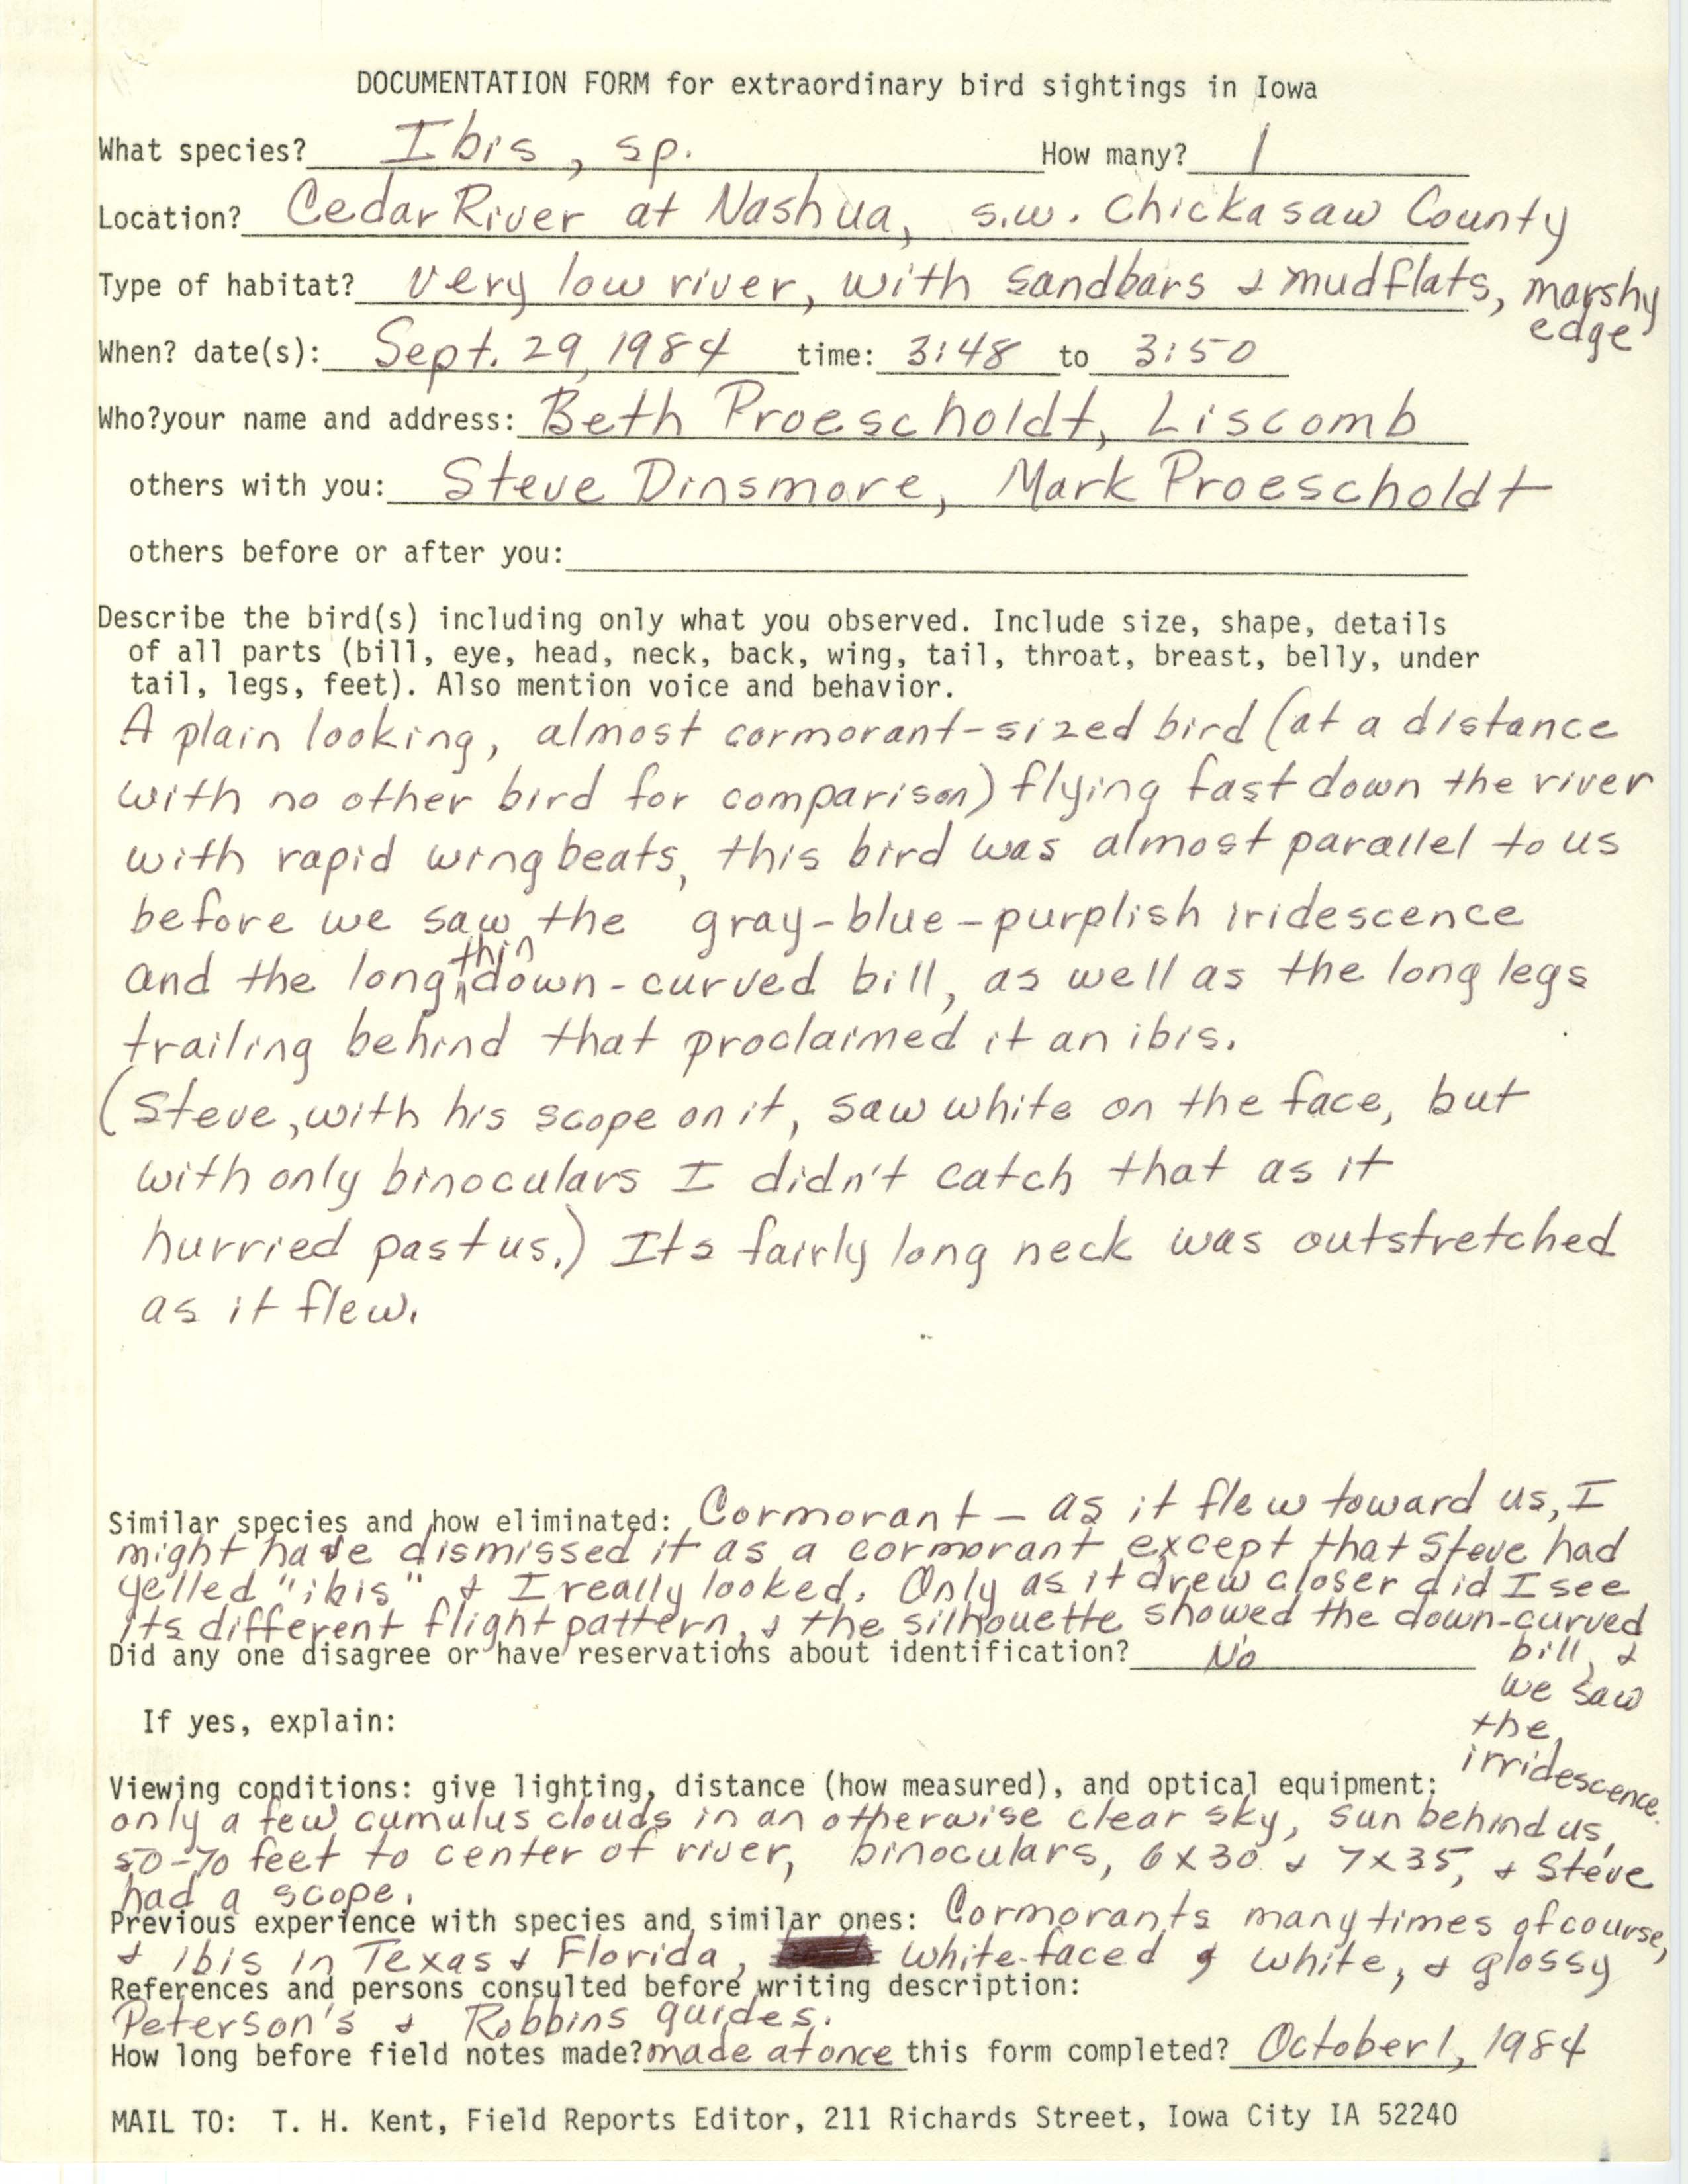 Rare bird documentation form for Ibis species at Cedar River at Nashua, 1984